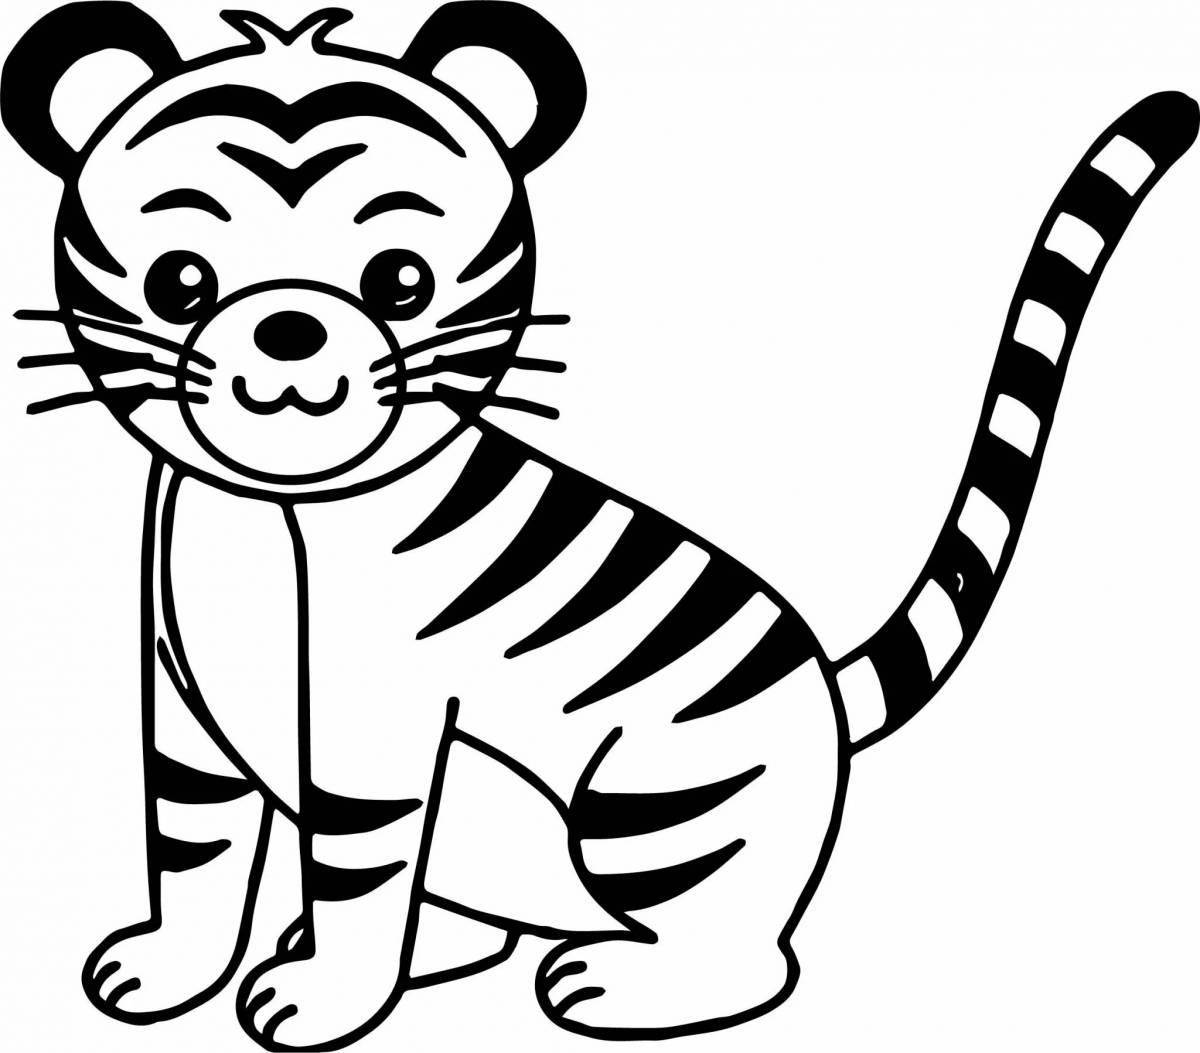 Exuberant tiger drawing